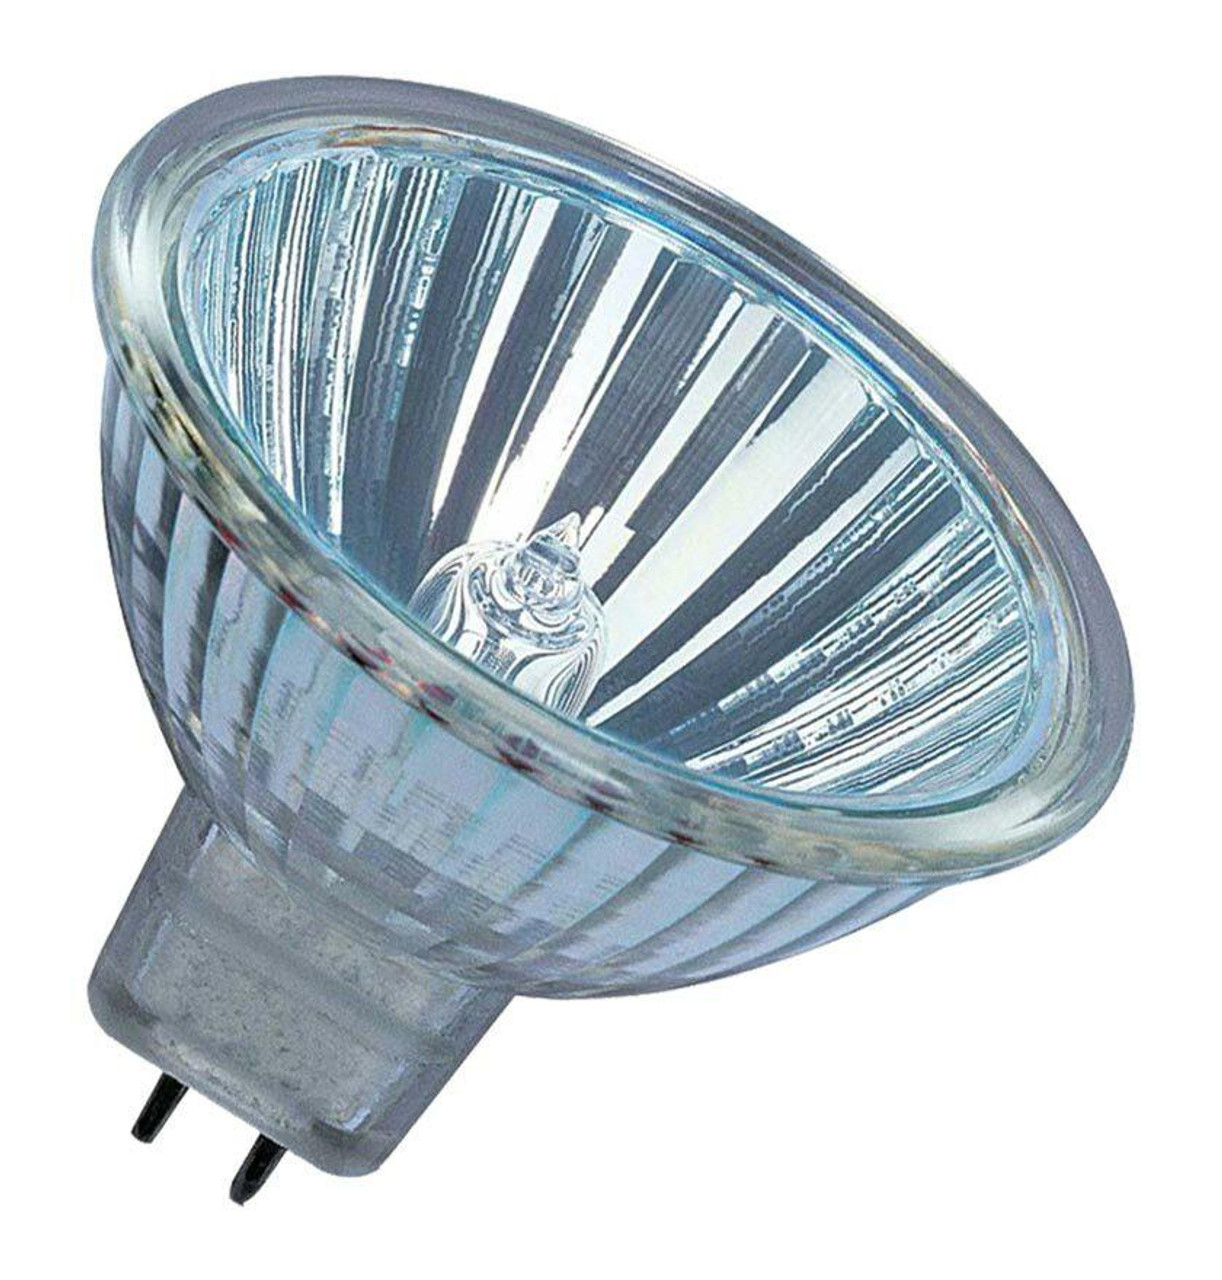 3x 50W MR16 GU5.3 12V Halogen Dichroic UV Filter Dimmable Spot Light Bulbs Lamps 